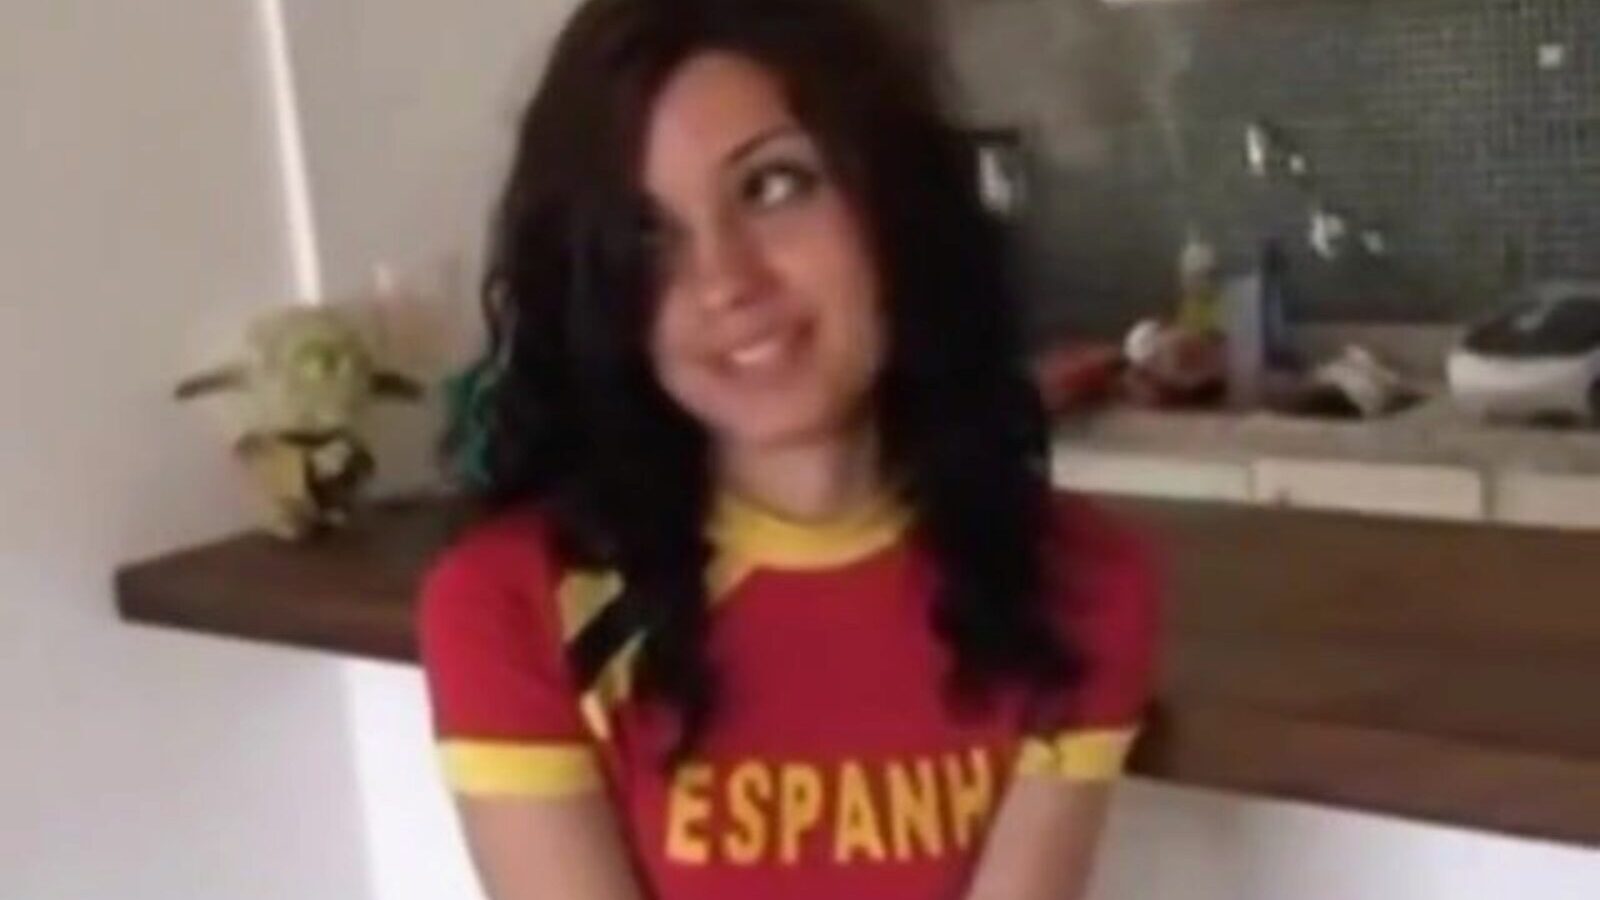 zeer hete Spaanse vriendin seks erg hete en lieve Spaanse vriendin heeft seks